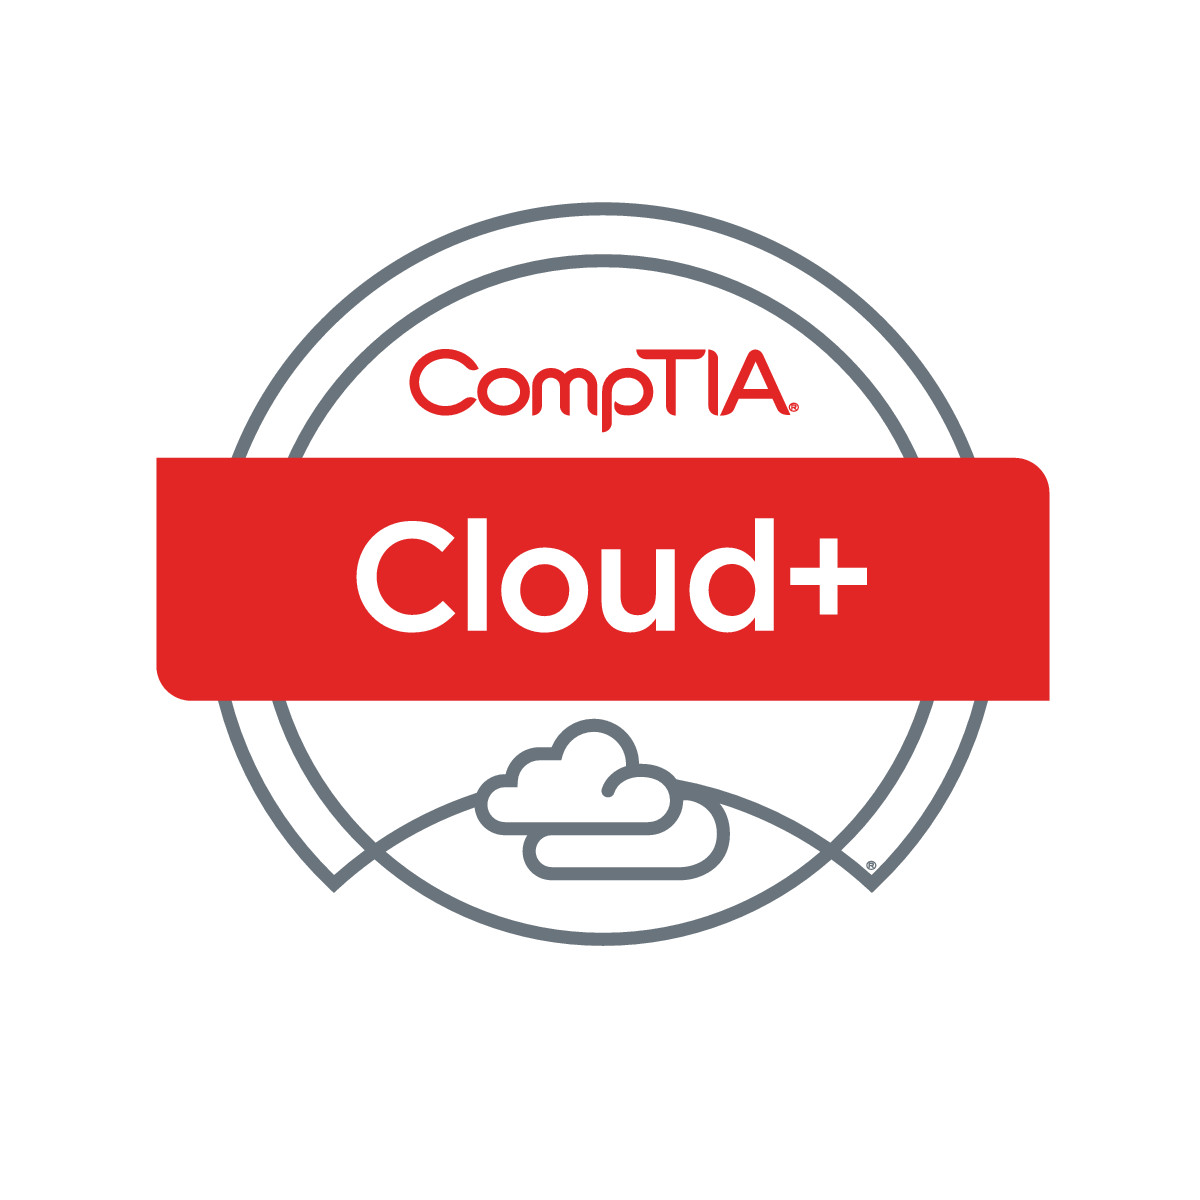 CV0-003 – CompTIA Cloud+ Updated 2021